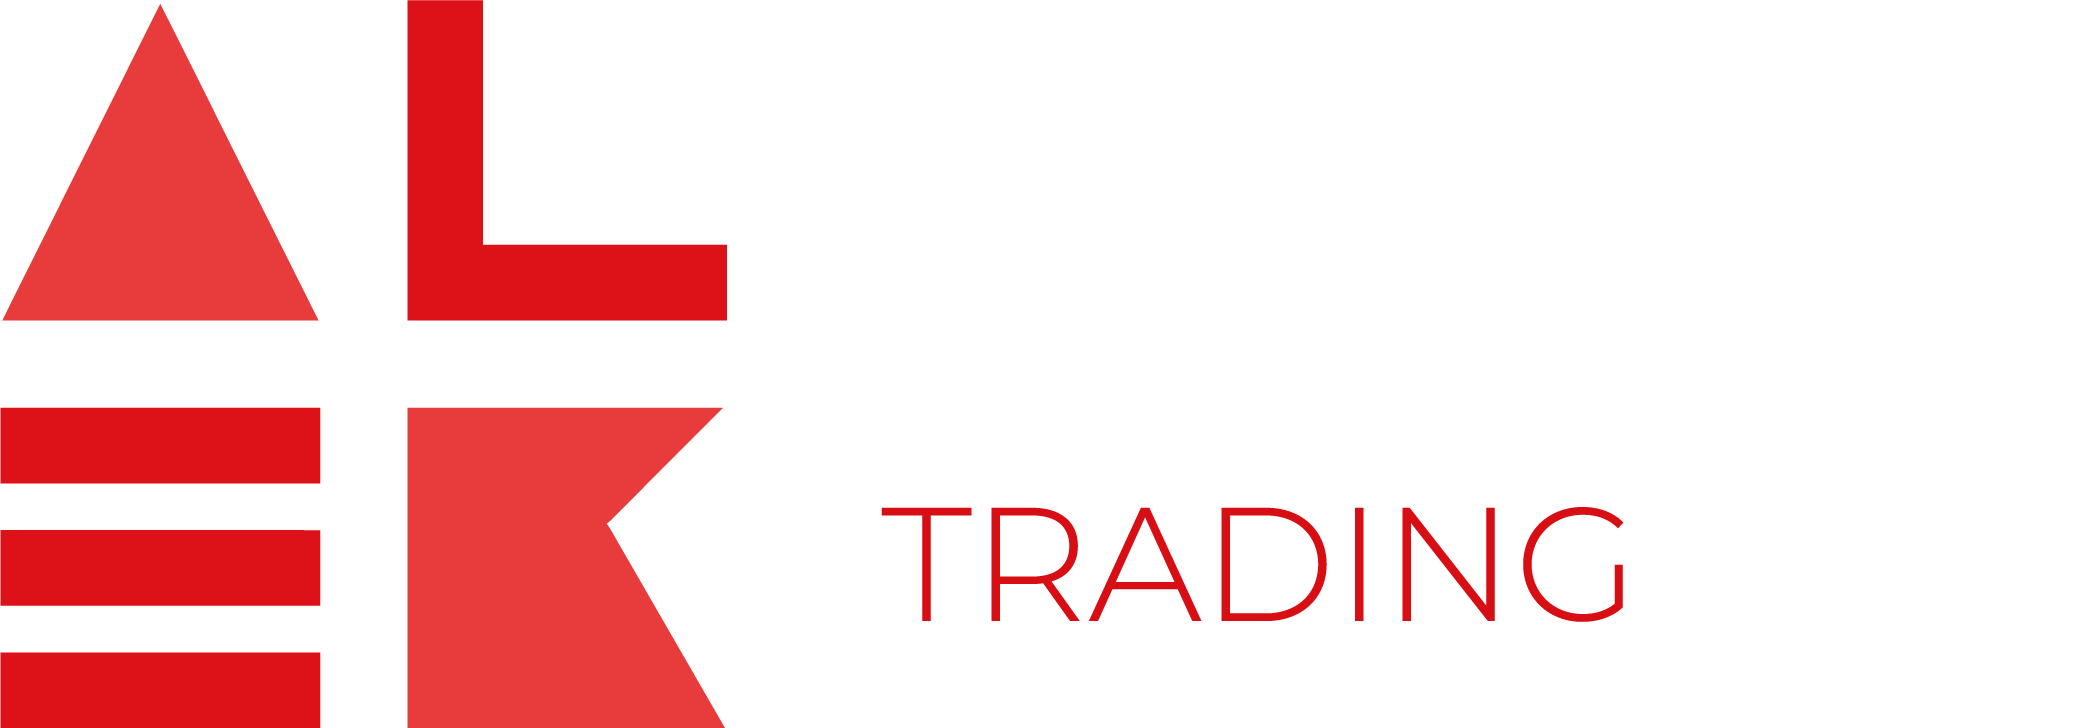 ALEK Trading